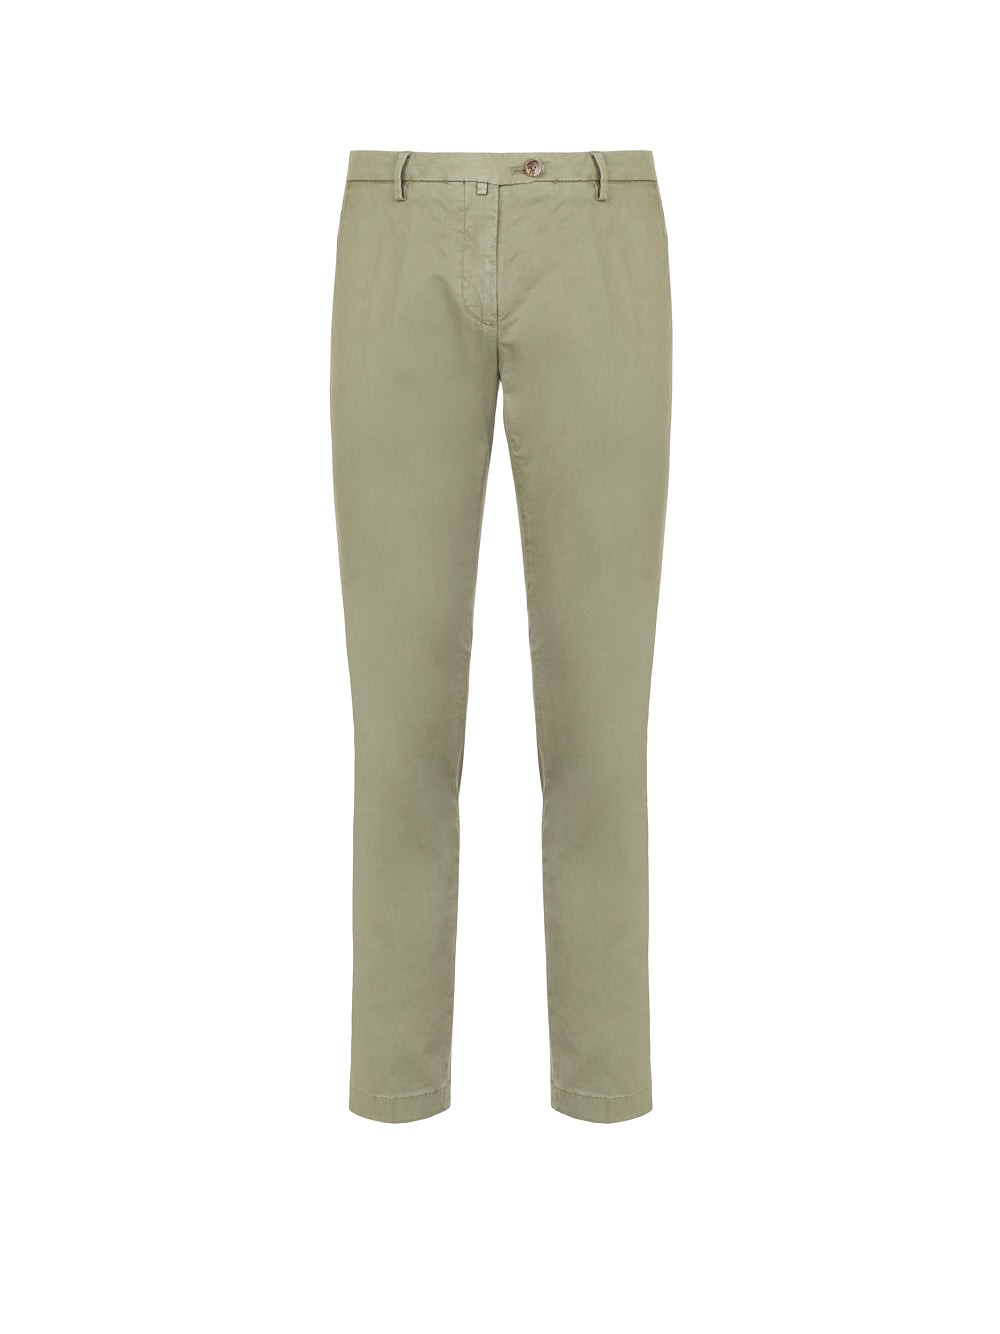 Pantalone BRIGLIA Tasca america slim fit
Verde